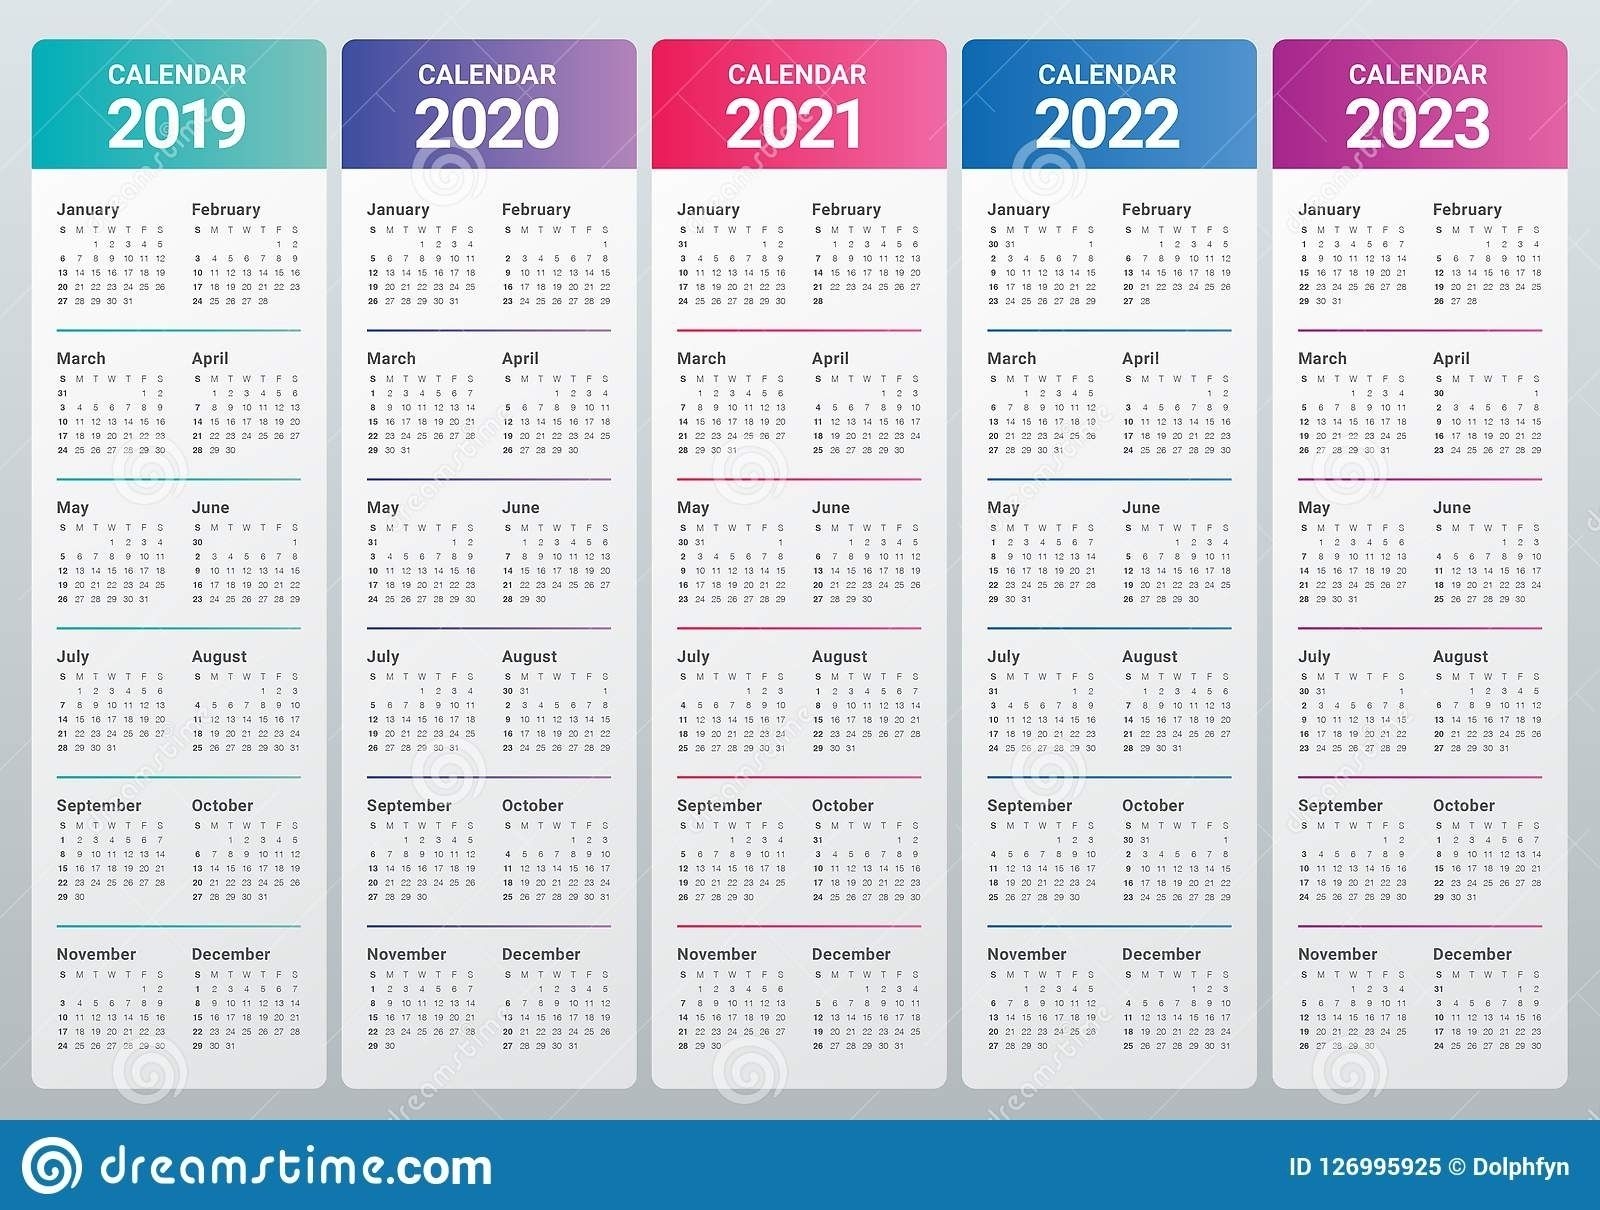 2020 2021 2022 2023 Calendar - Calendar Inspiration Design